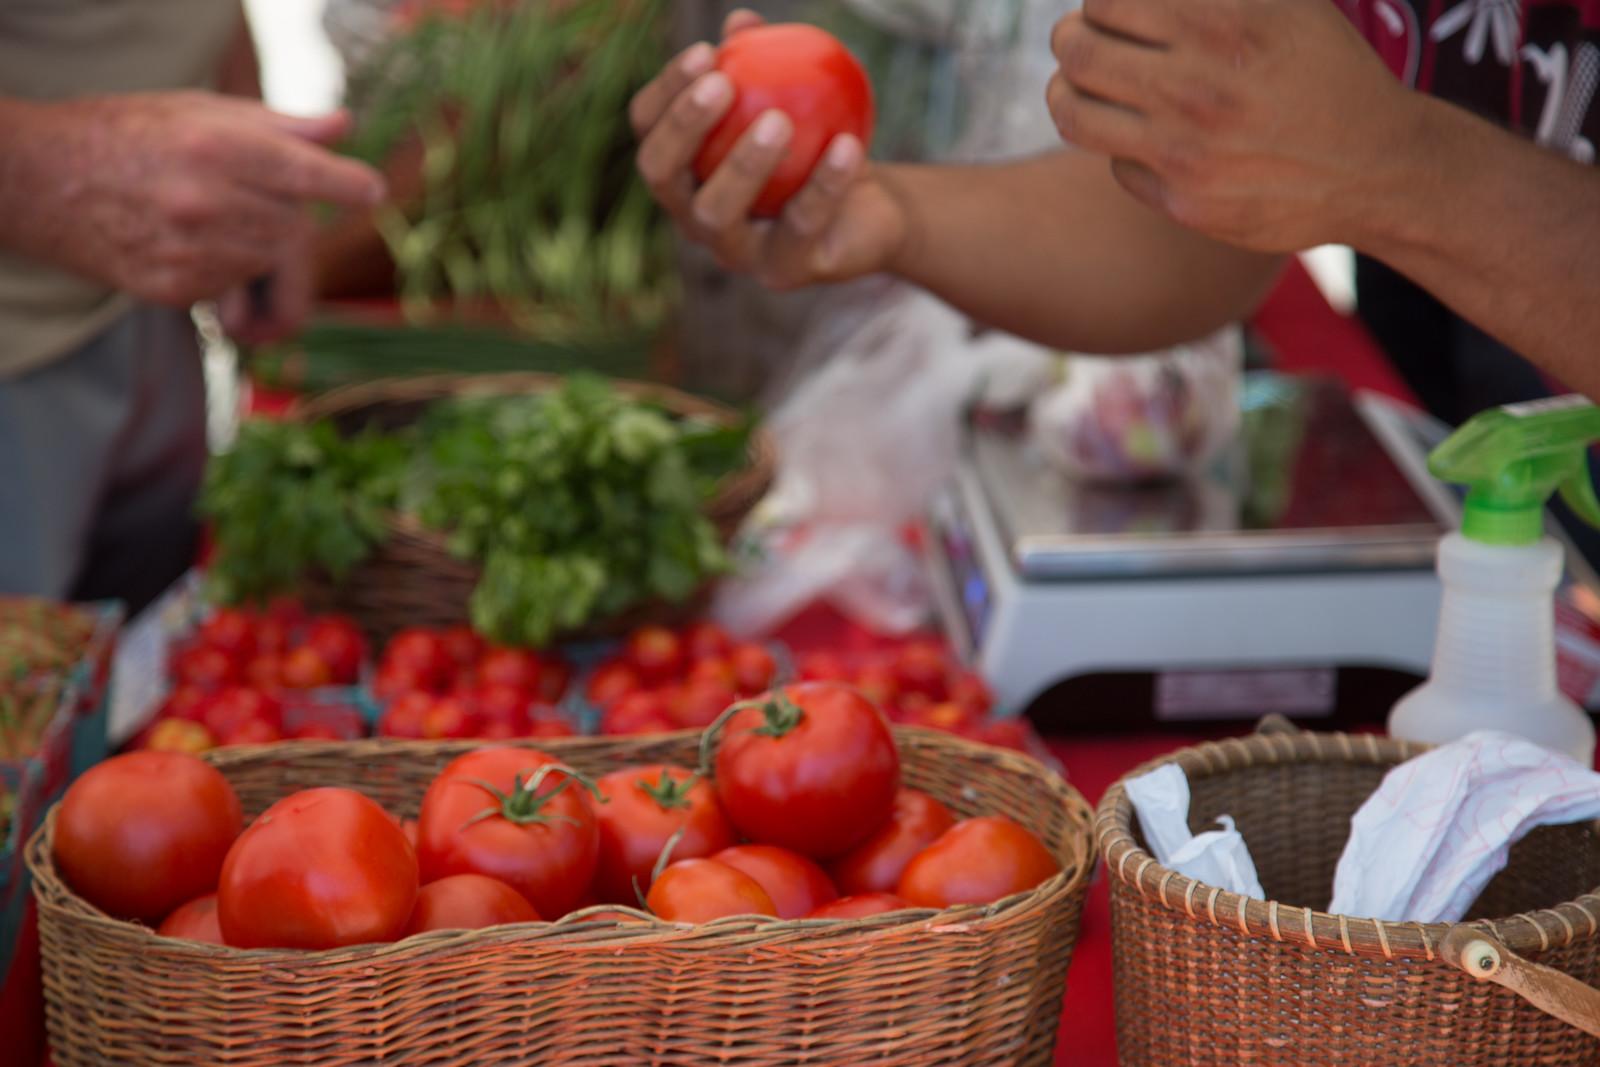 Person holding tomato at farmer's market